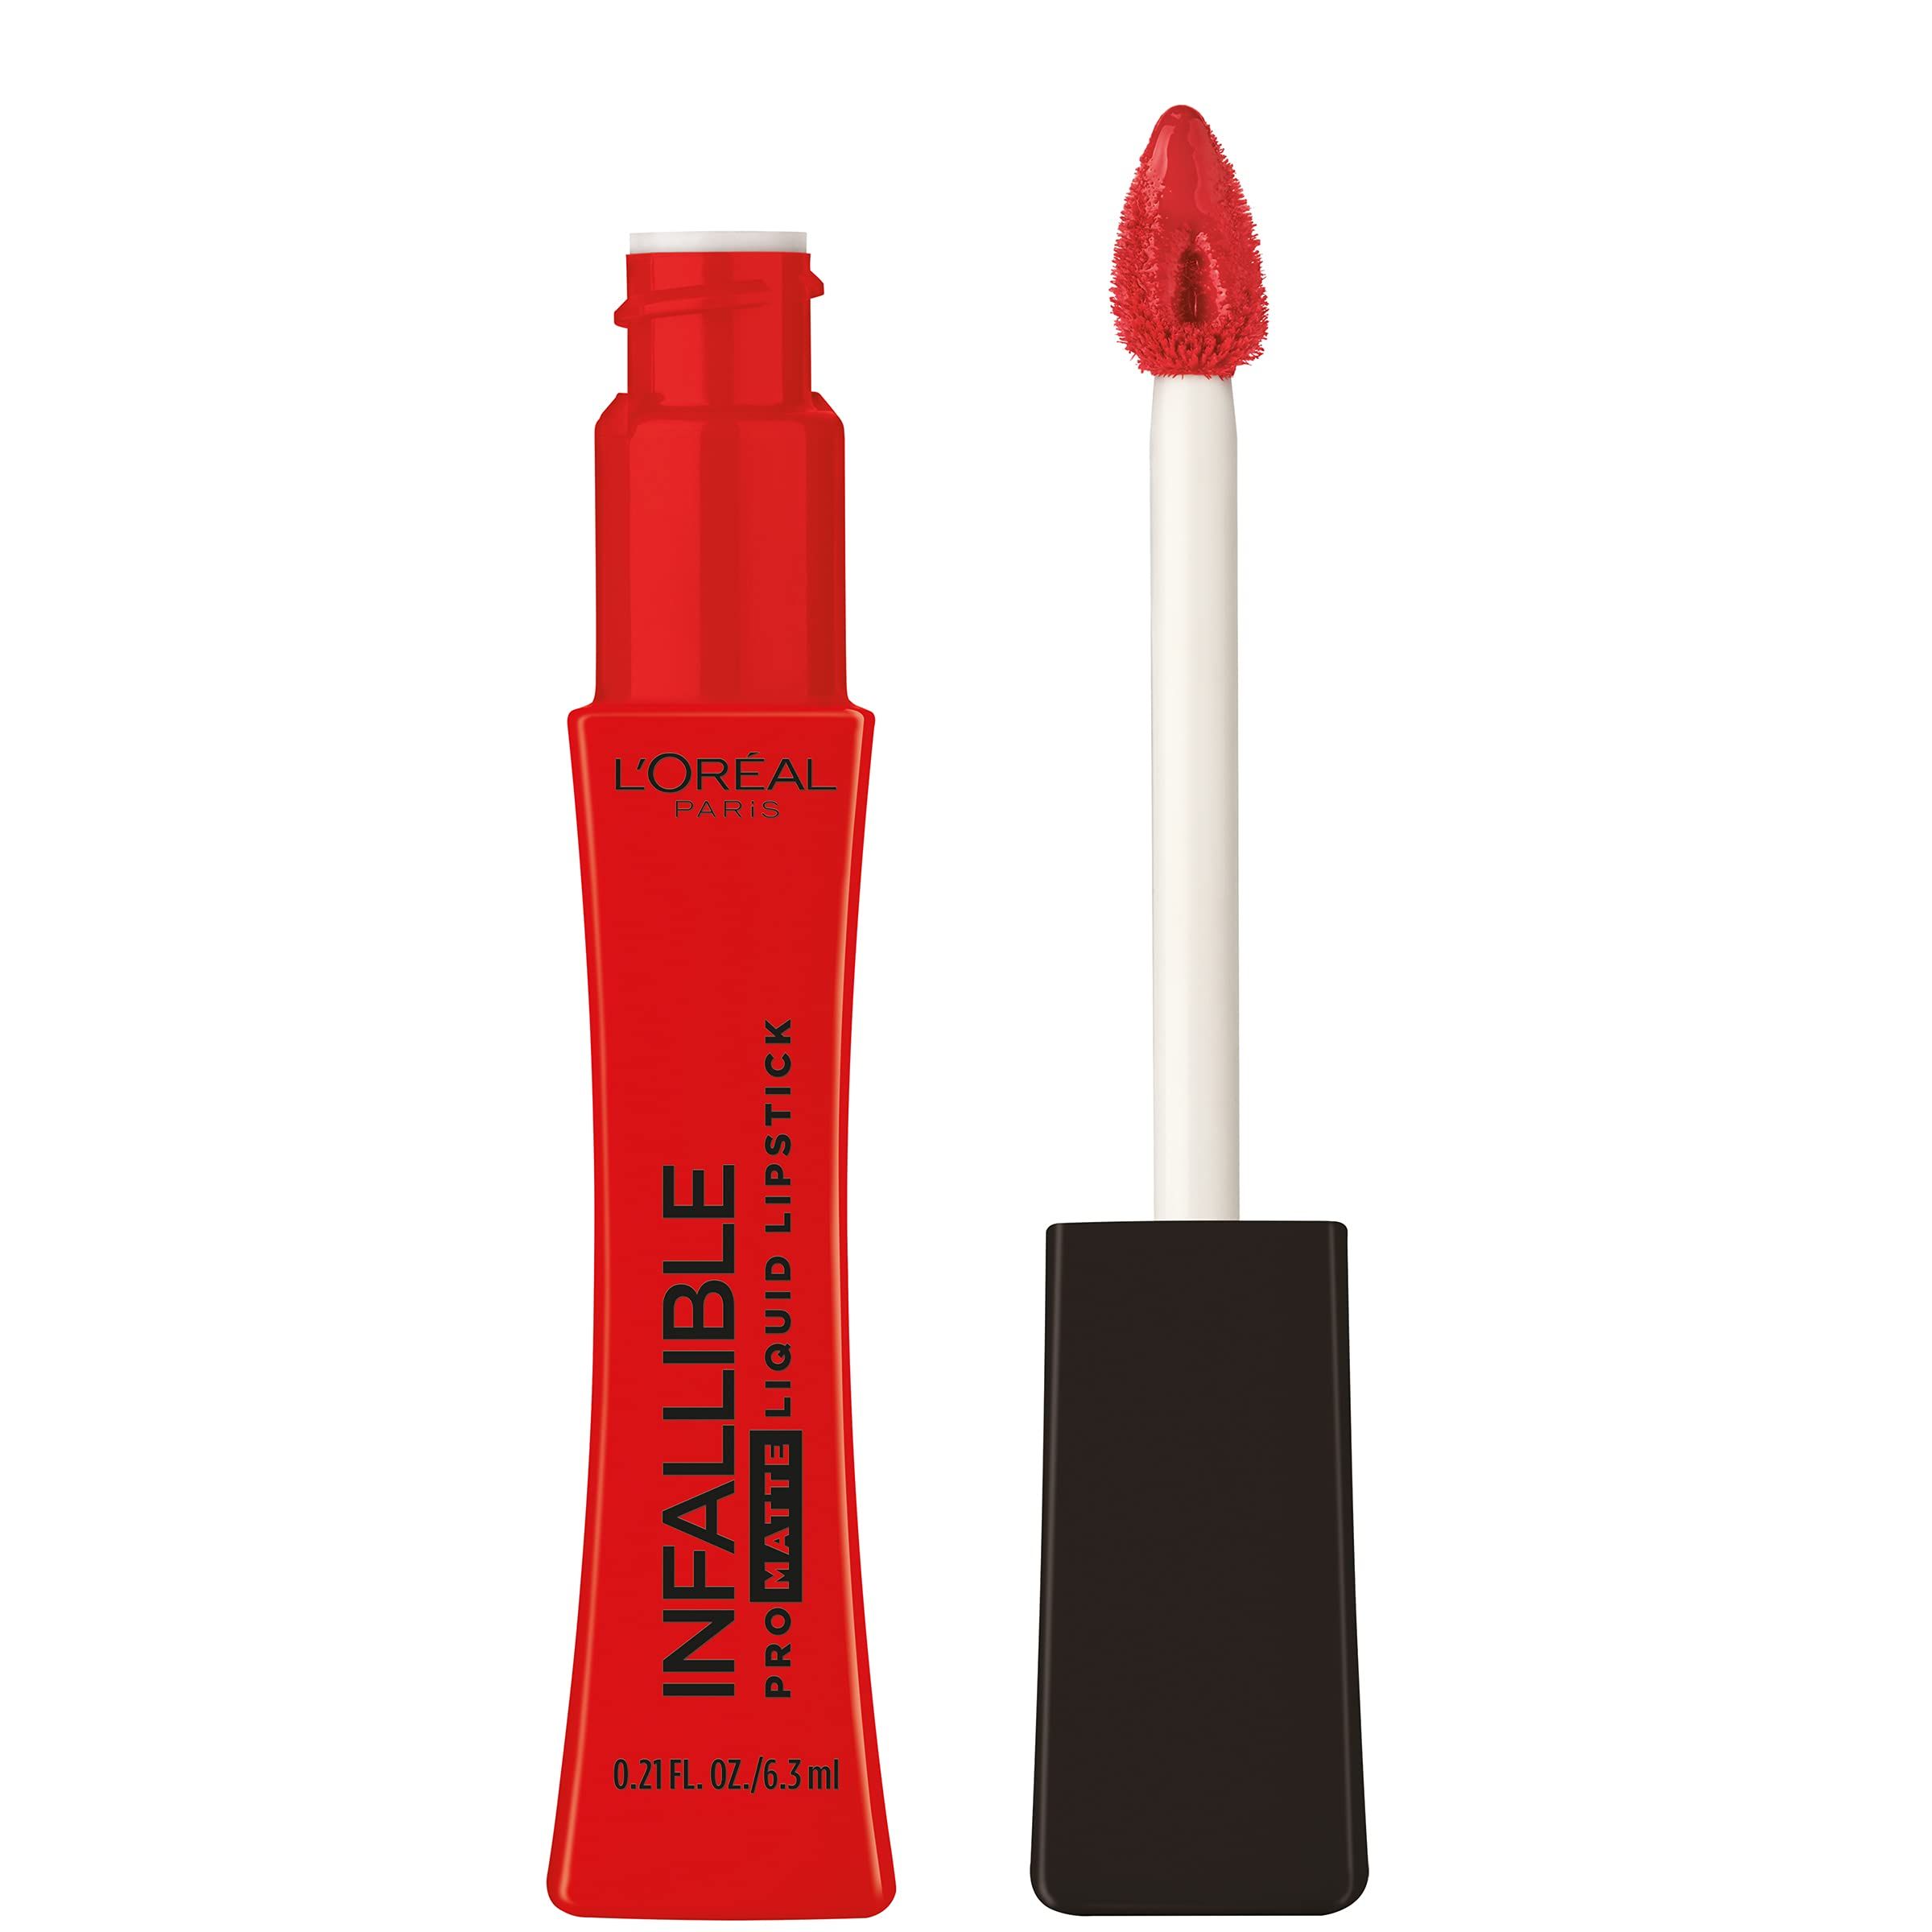 L'Oréal Paris Infallible Pro Matte Liquid Lipstick, Long-Lasting Intense Matte Color, Up to 16HR Wear, highly pigmented, full coverage liquid lipstick, Red Affair, 0.21 fl. oz. | Amazon (US)